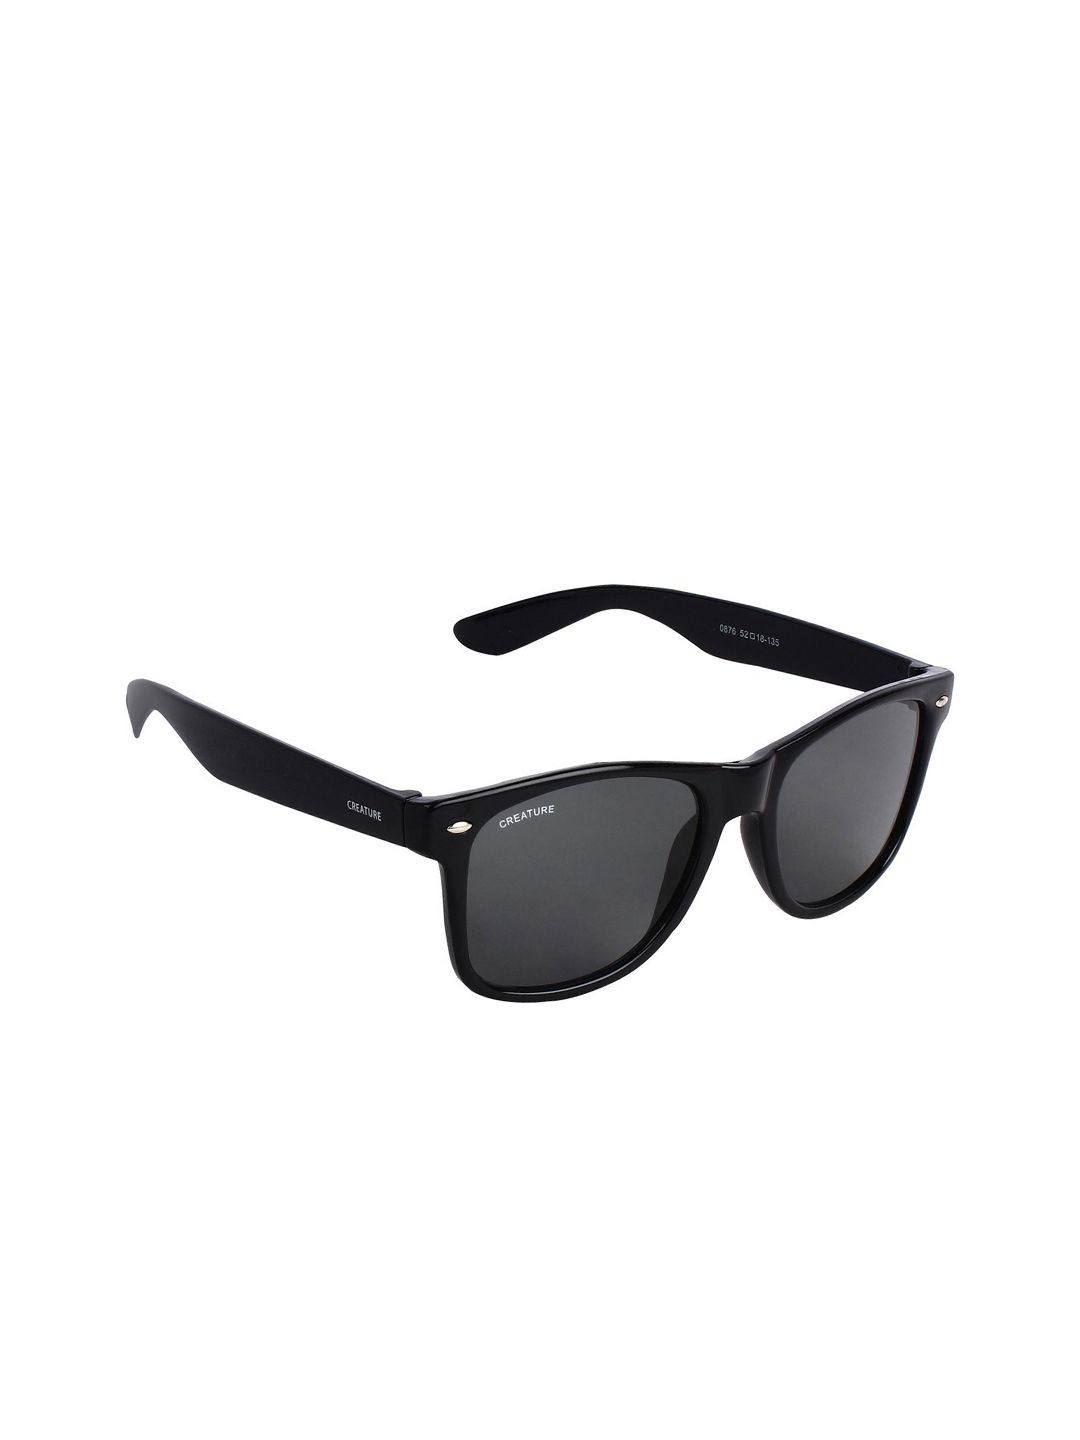 Creature Unisex Black Lens & Black Aviator Sunglasses with UV Protected Lens Price in India